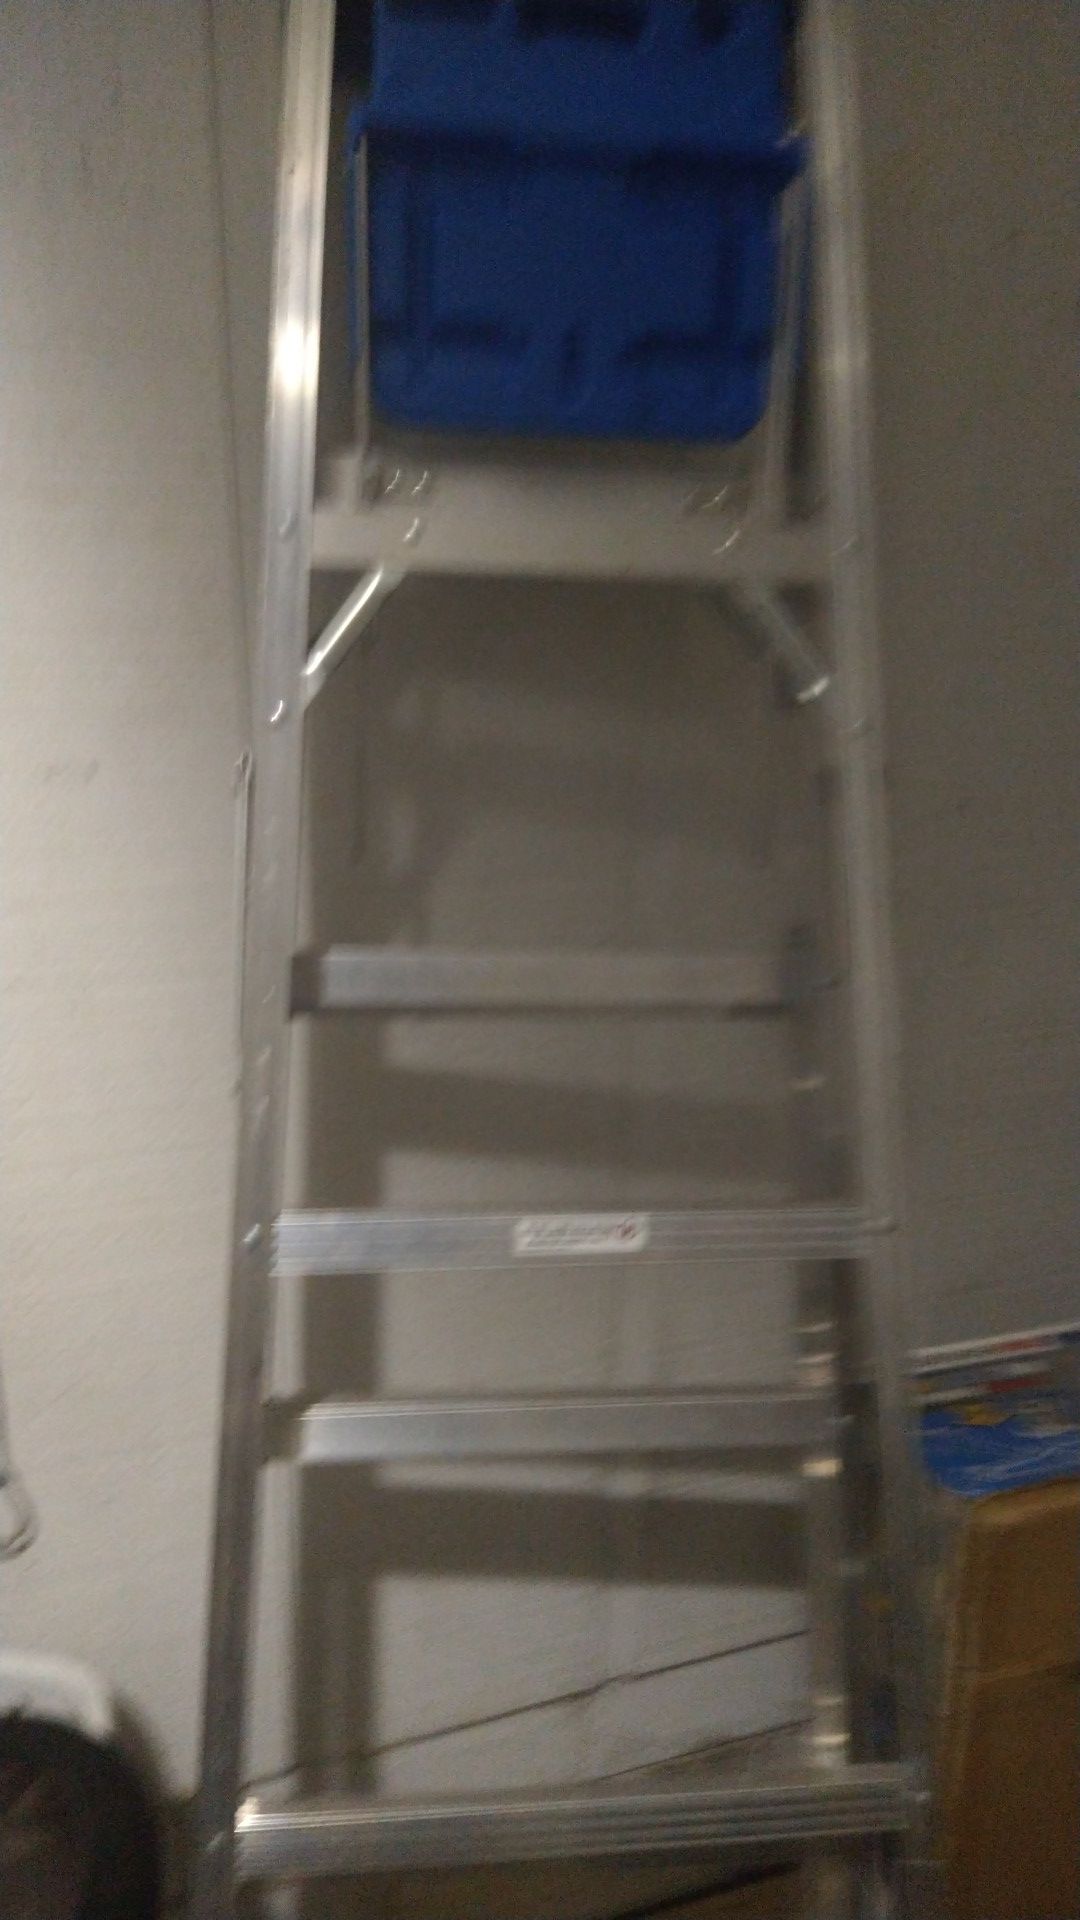 6' ladder